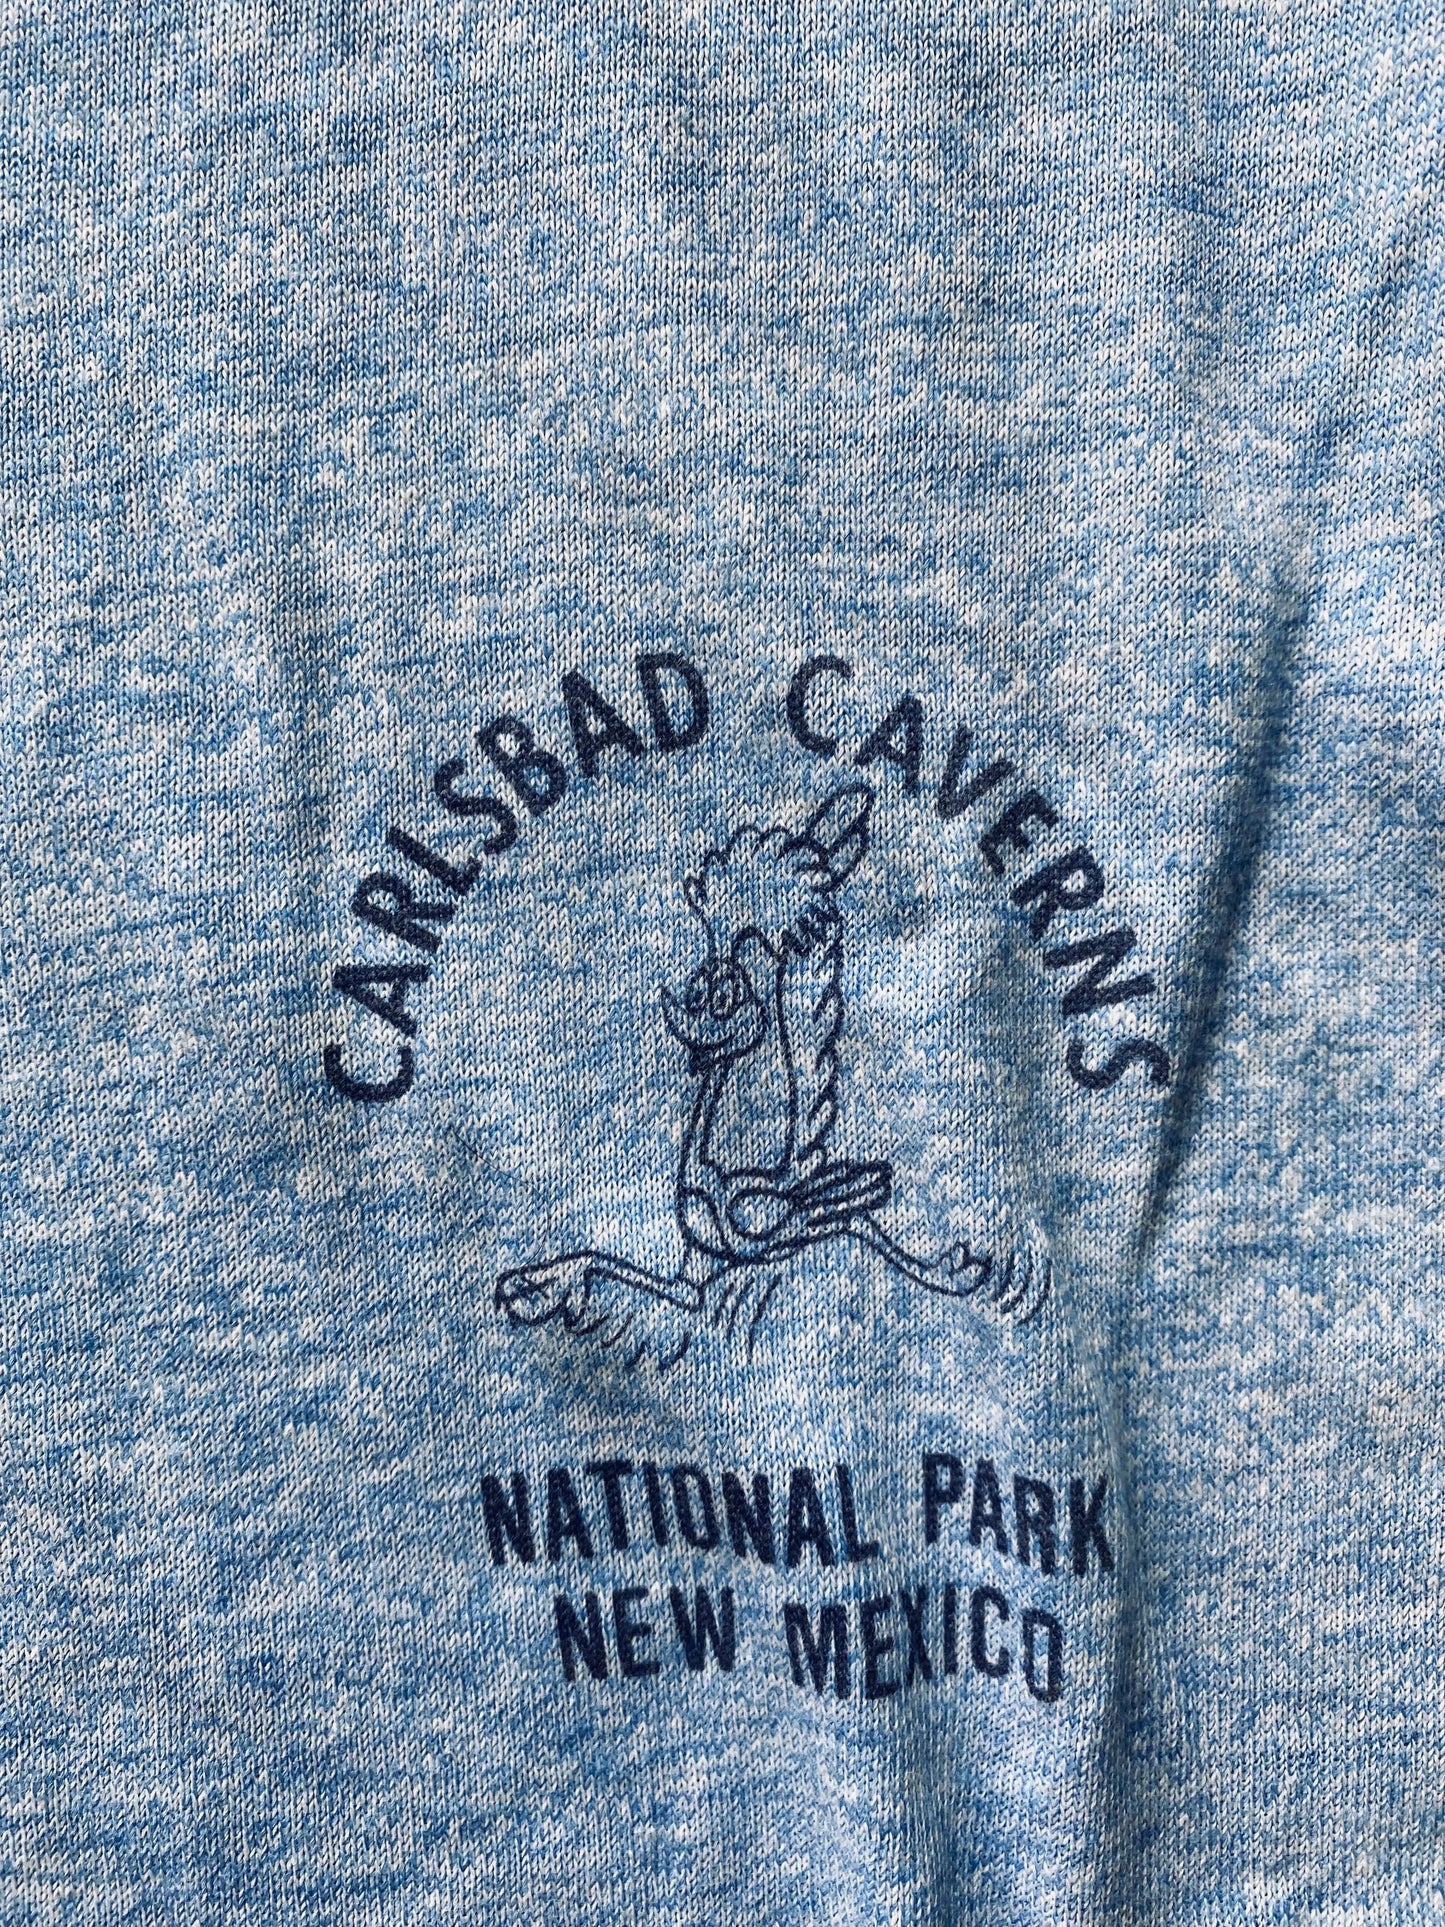 1970s Sportswear “Carlsbad Cavern” Ringer Tee